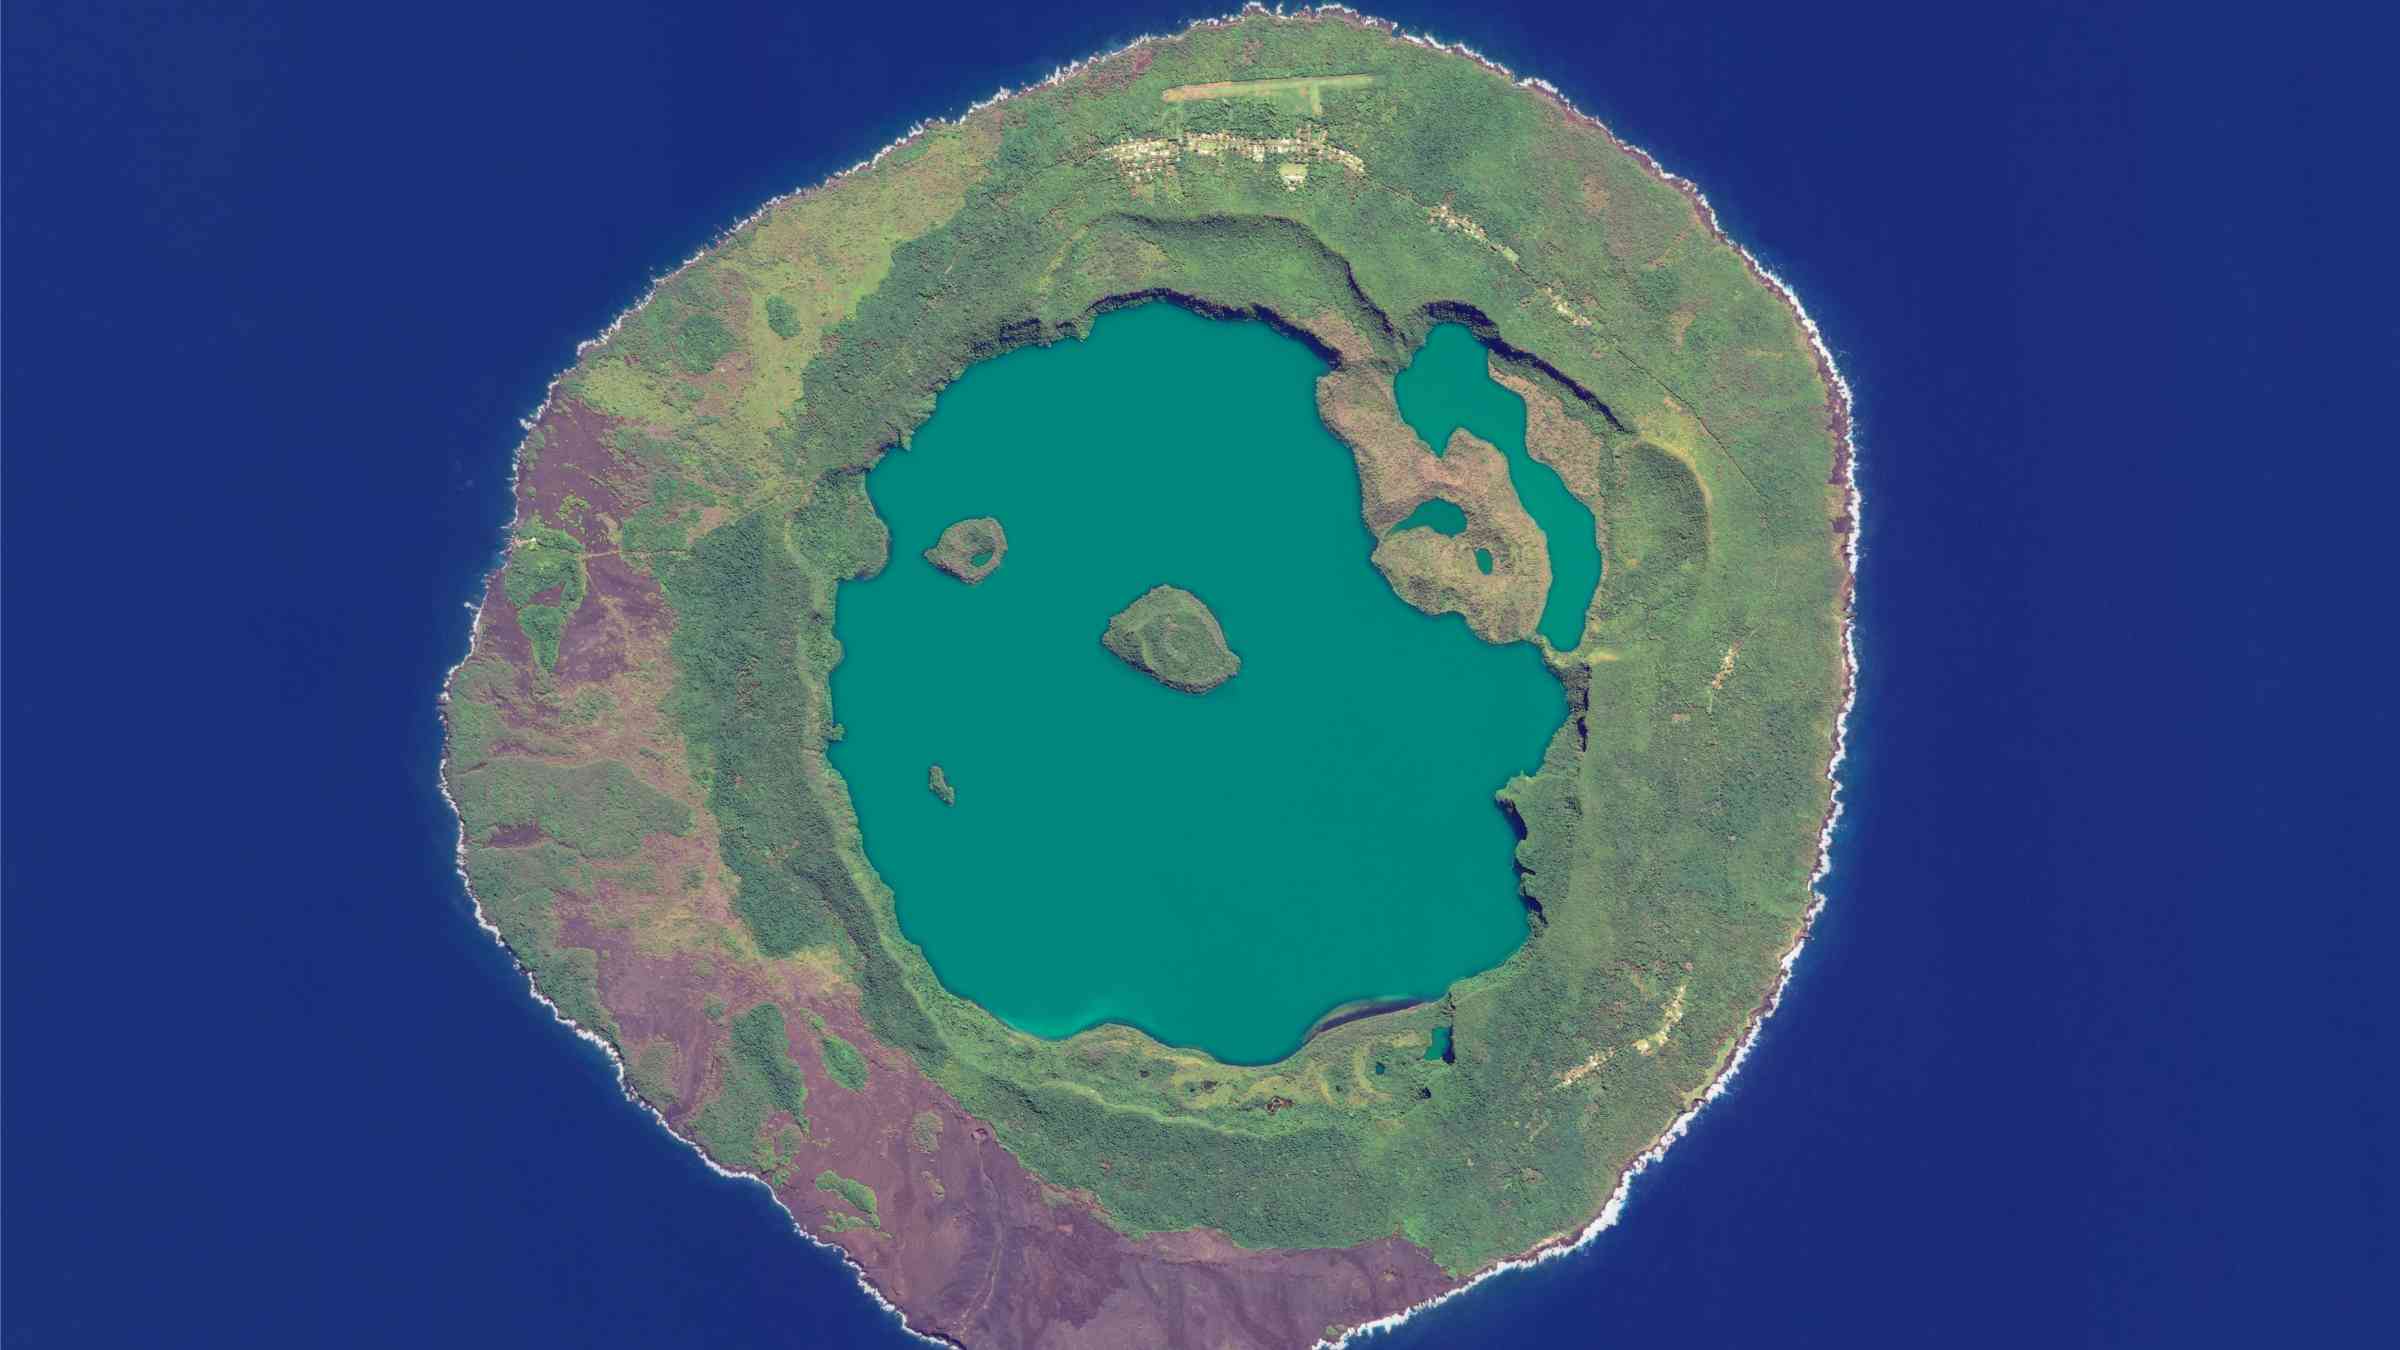 Aerial view of Niuafo’ou volcano in Tonga